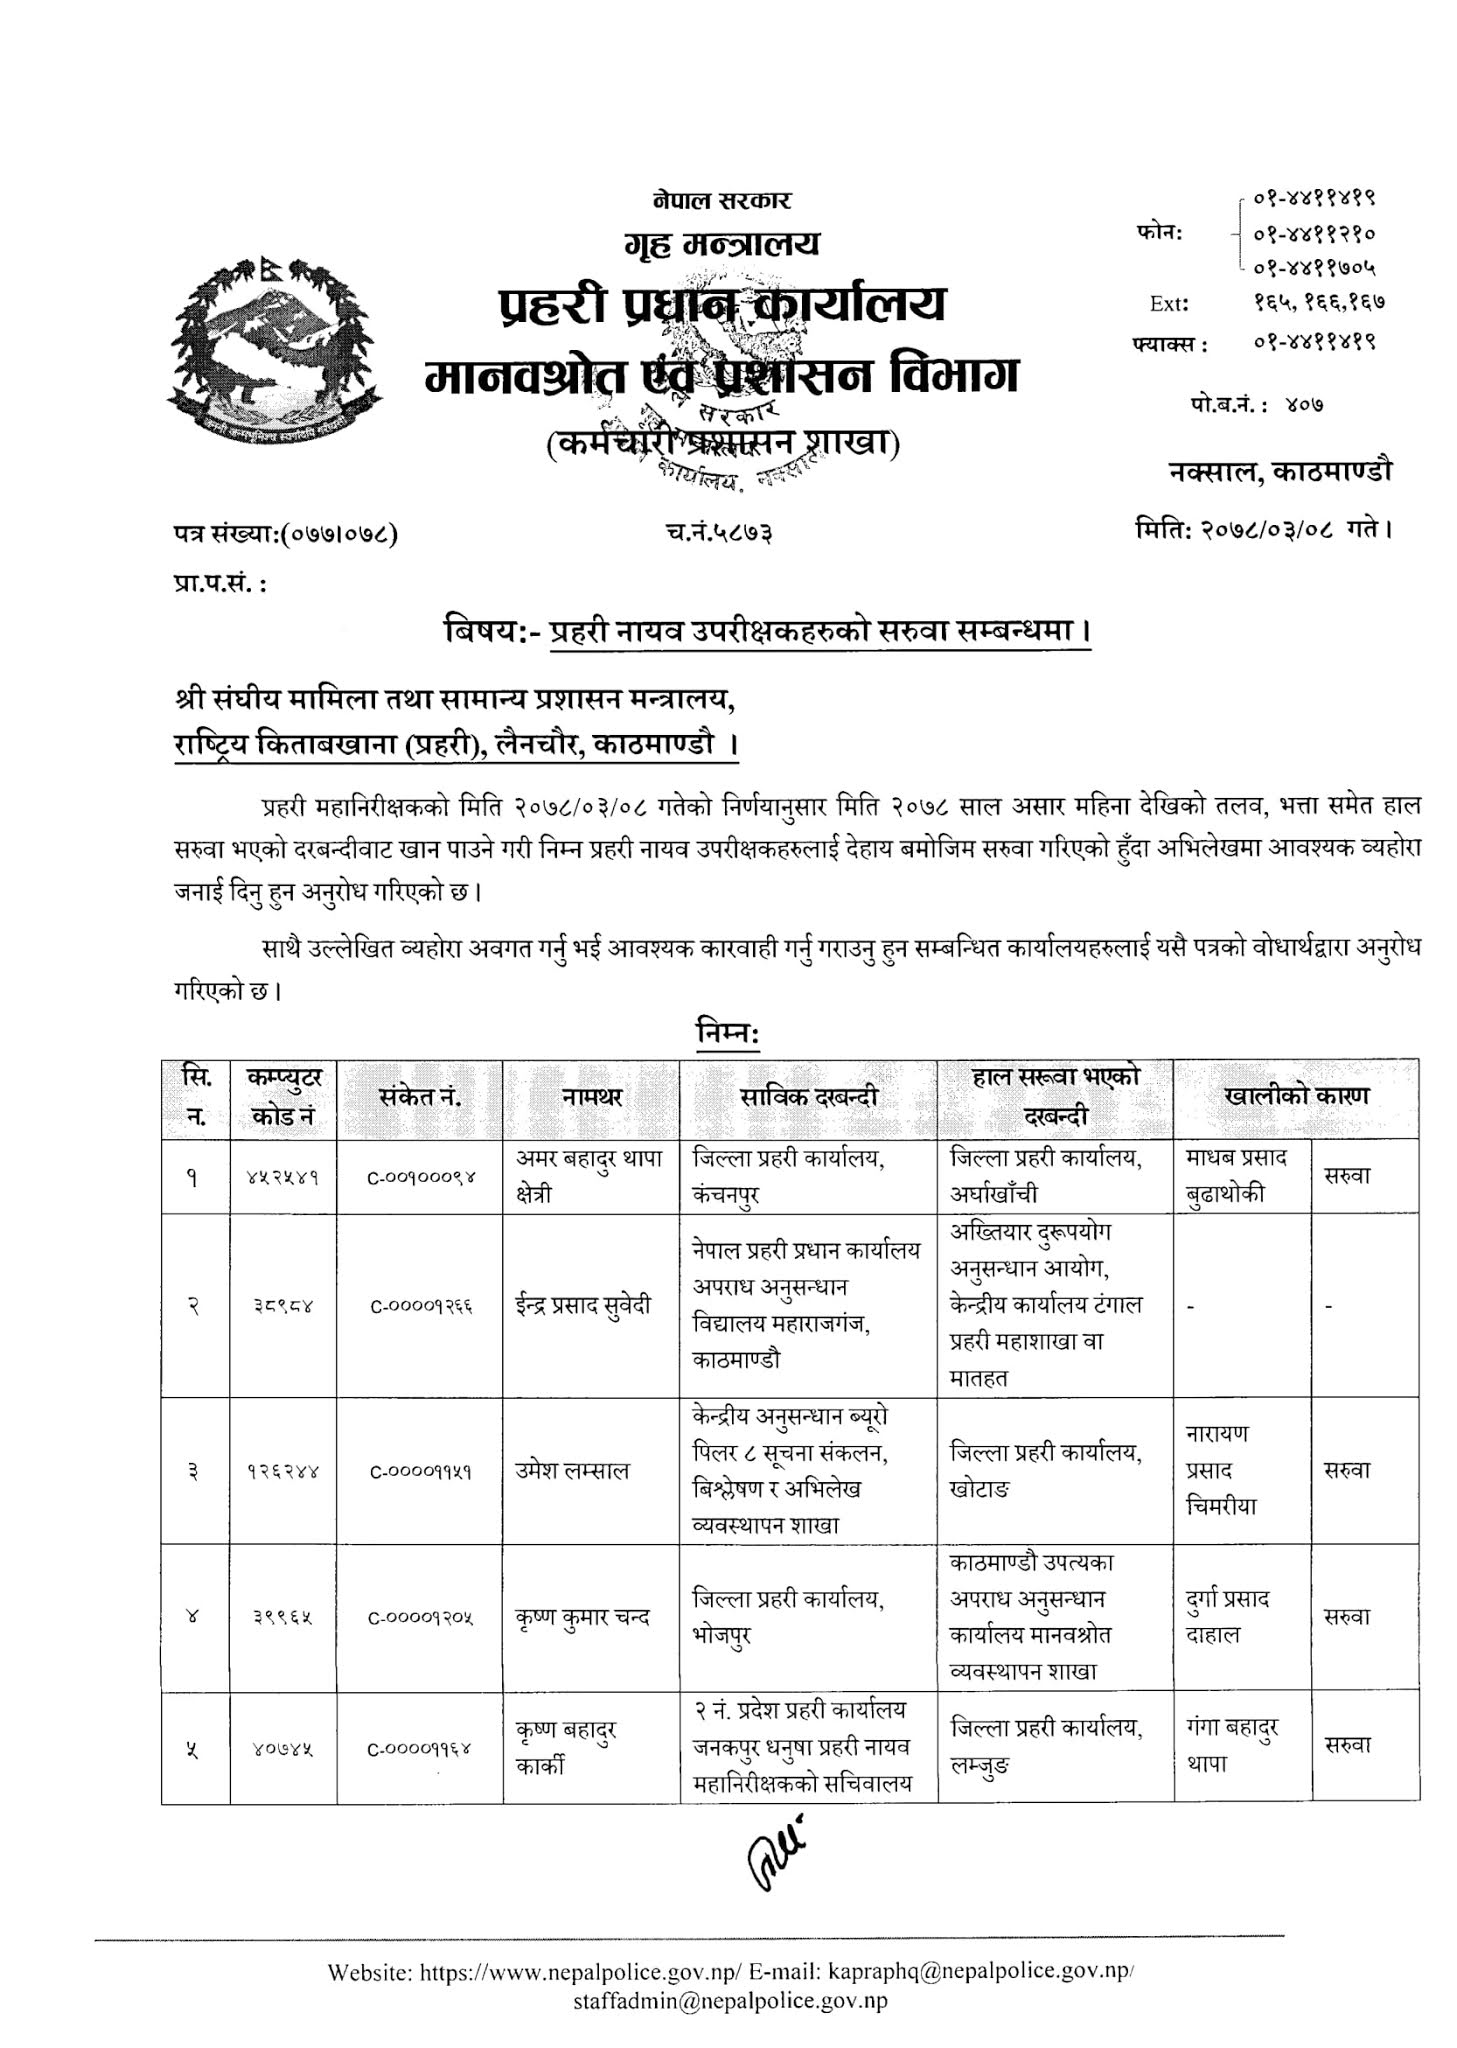 Nepal Police - Transfer List of 57 Deputy Superintendent of Nepal Police (DySP)